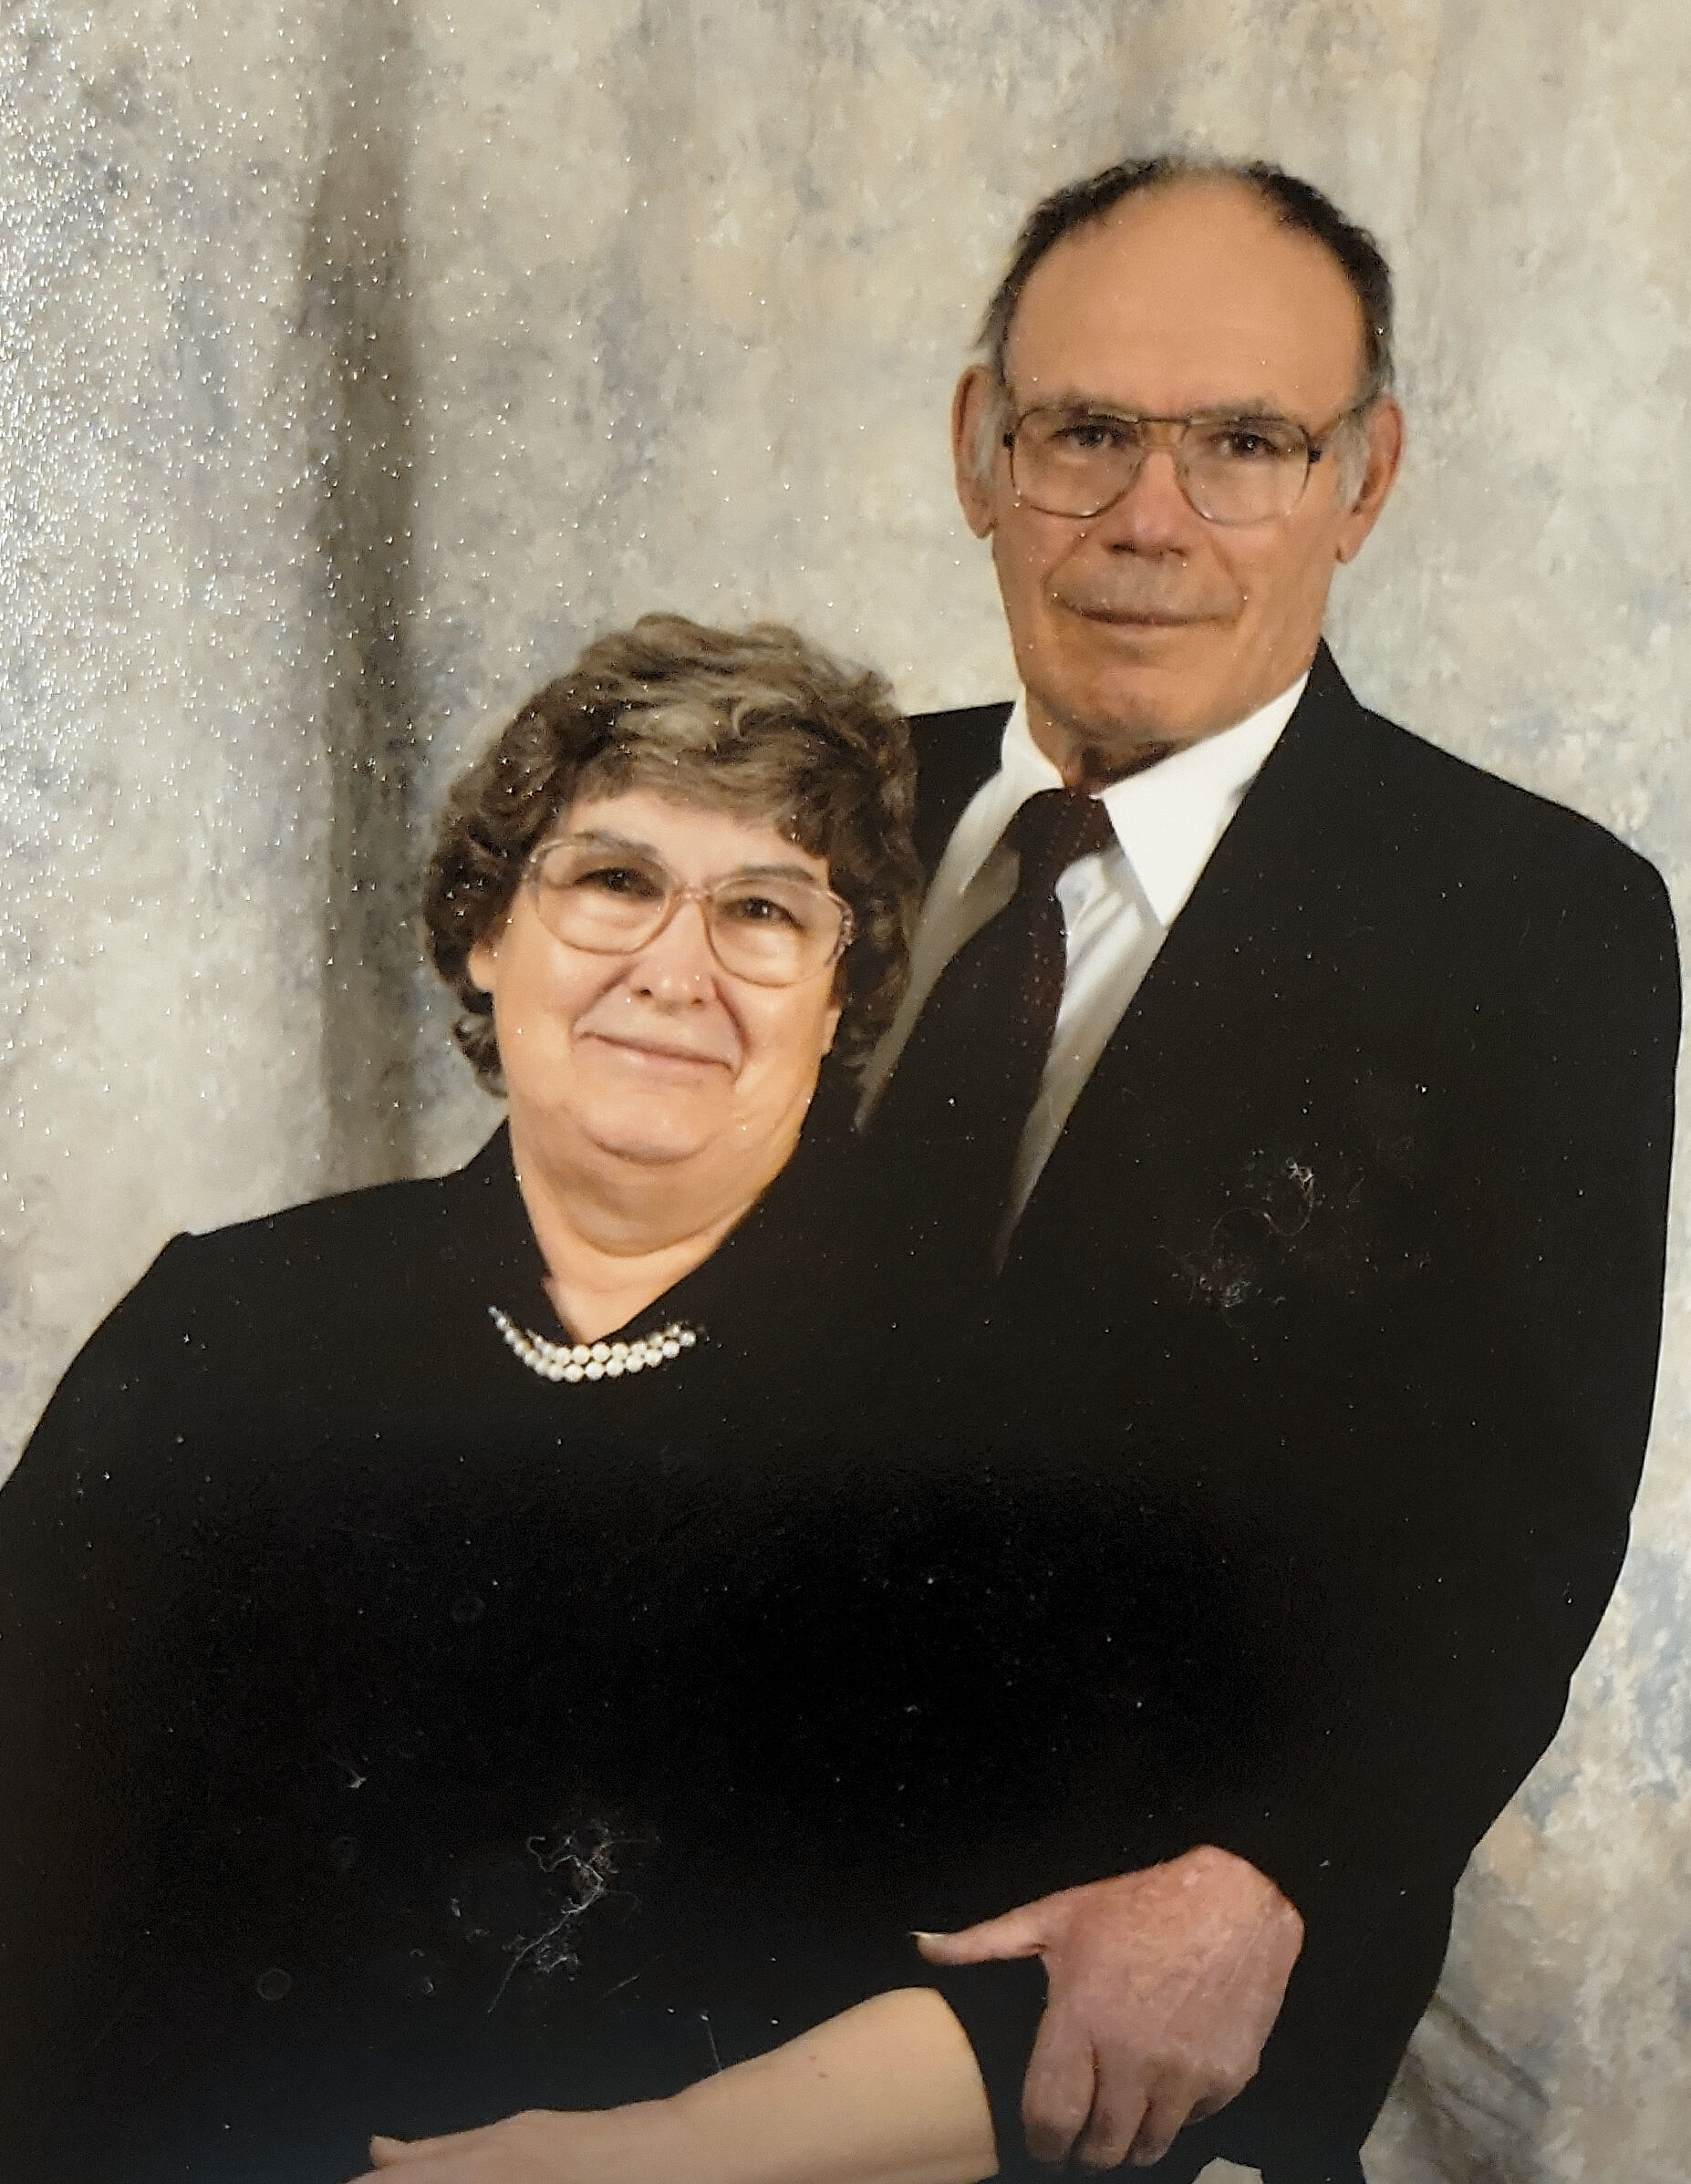 Arthur & Arlene Huber 
50th anniversary
May 15, 1954 - May 15, 2004